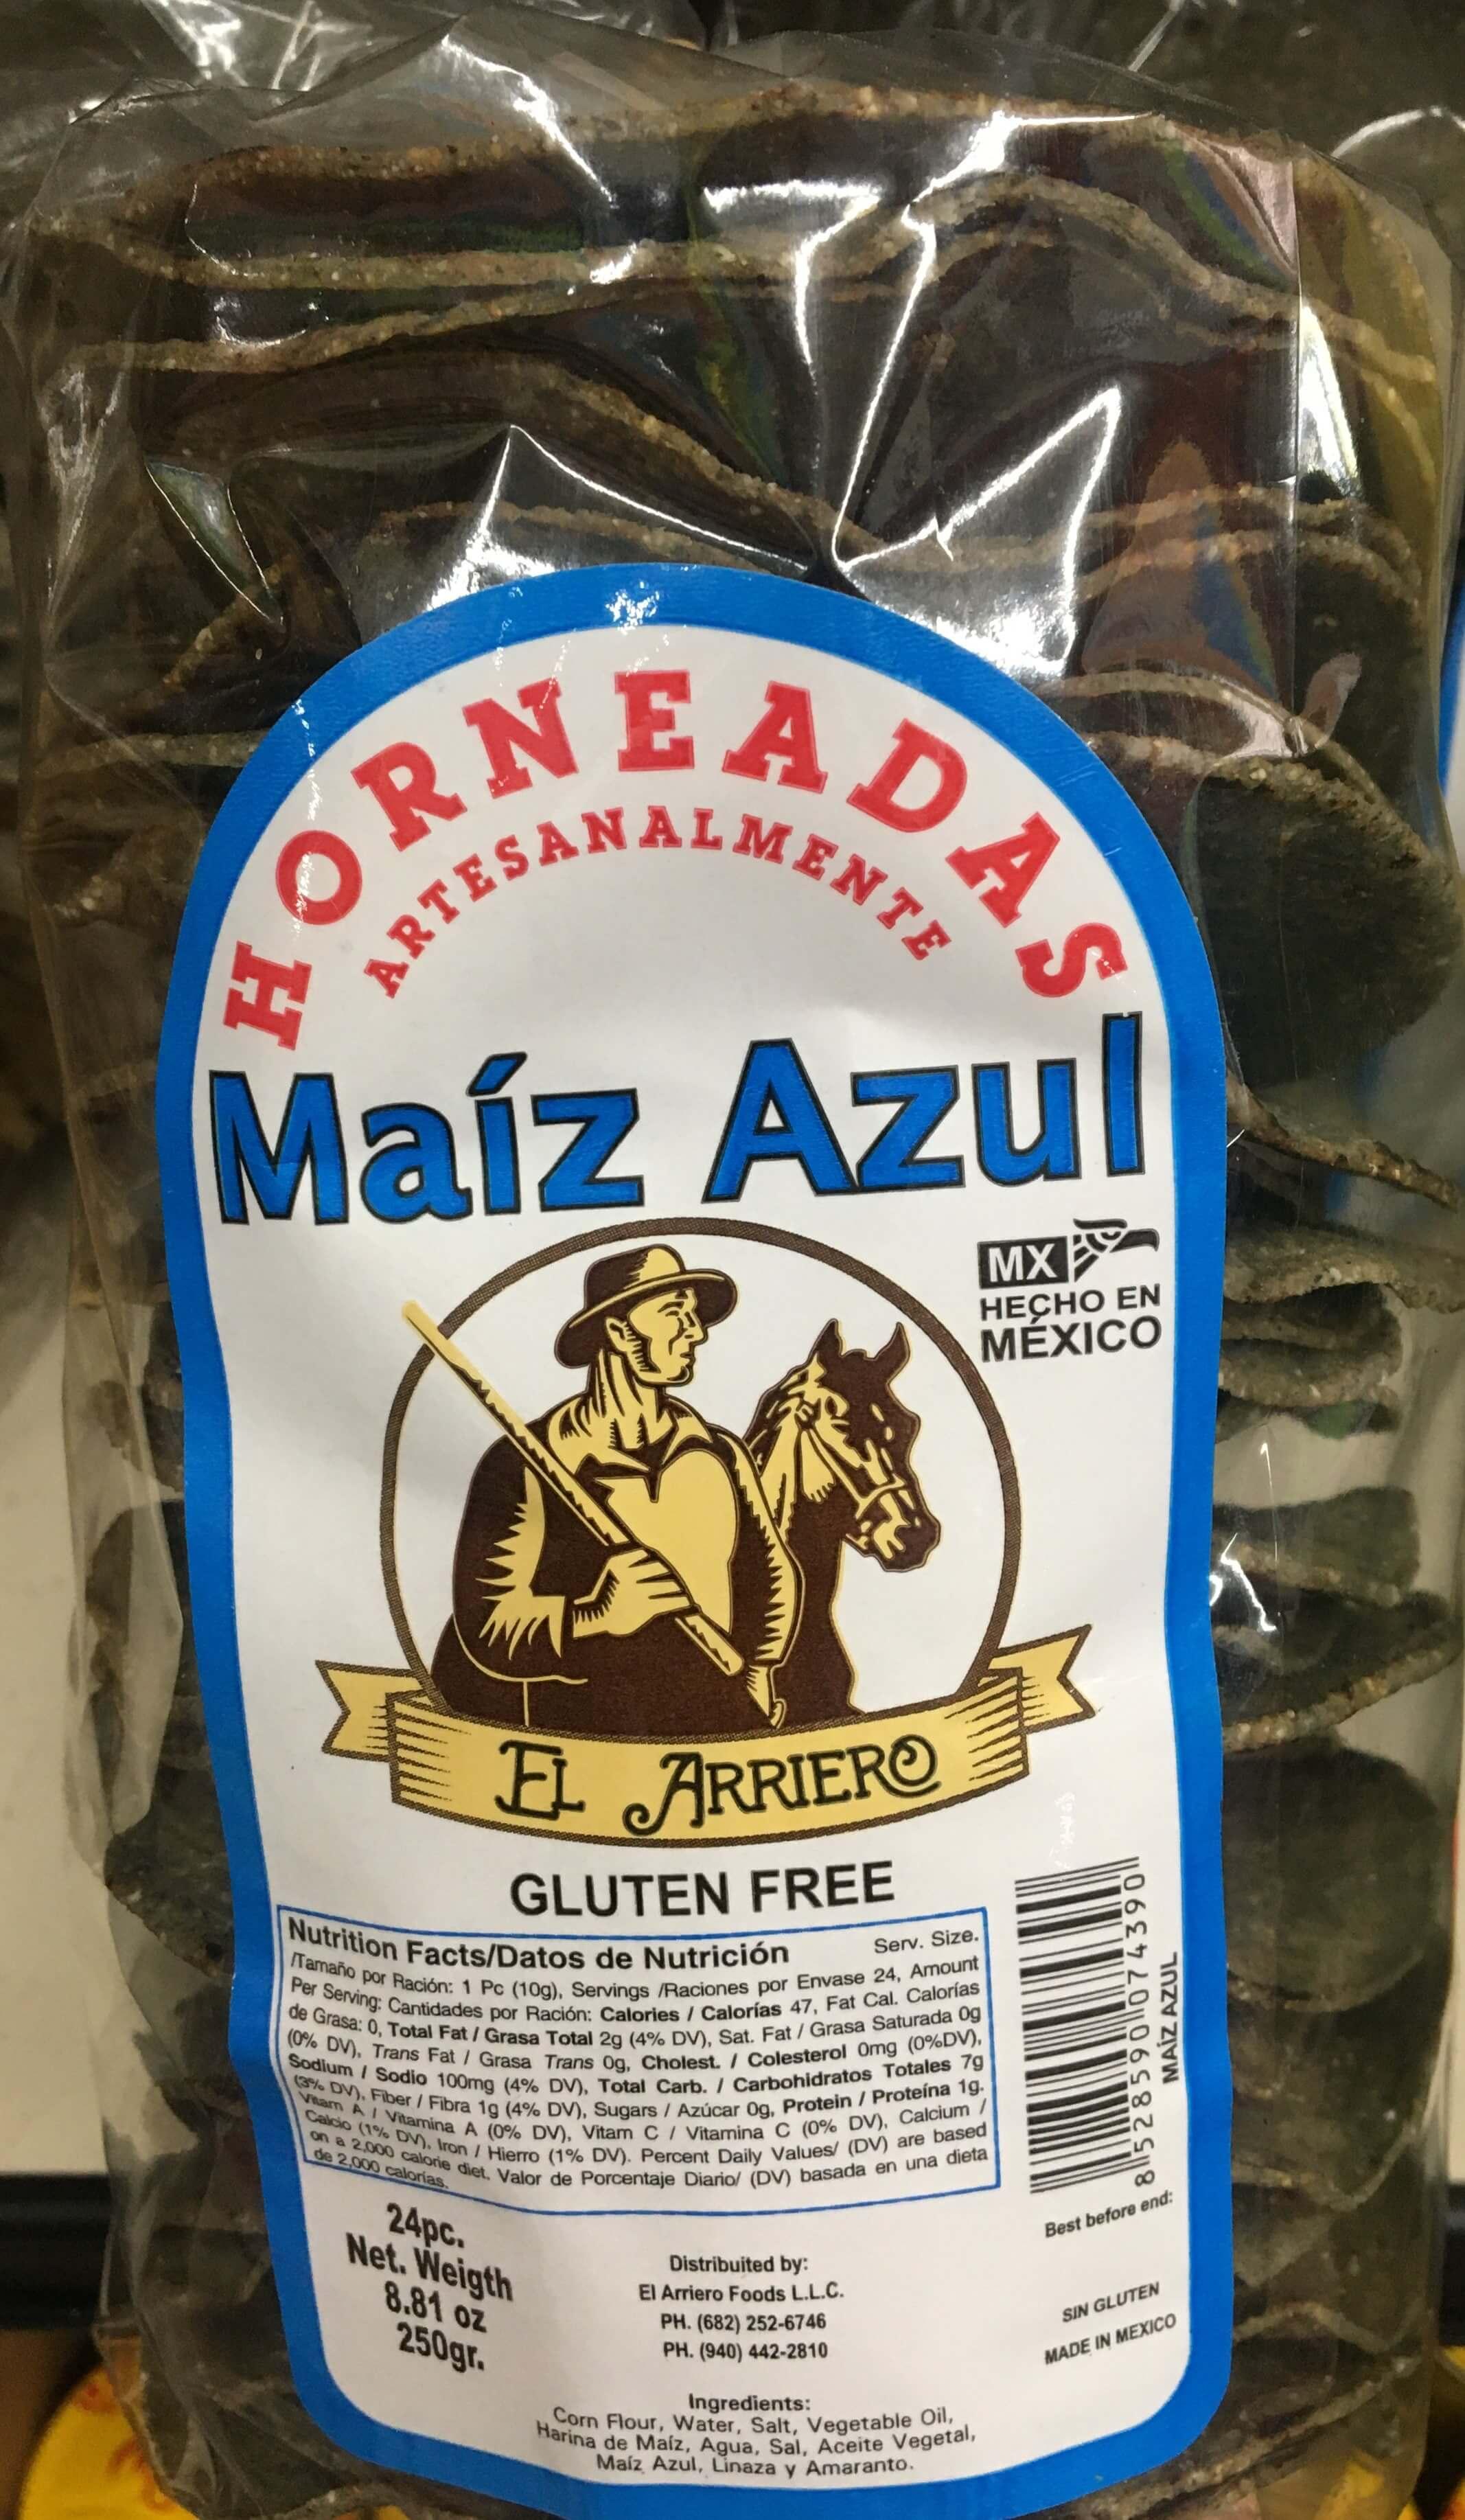 El Arriero - Tortillas Maiz Azul Gluten Free 8.81oz